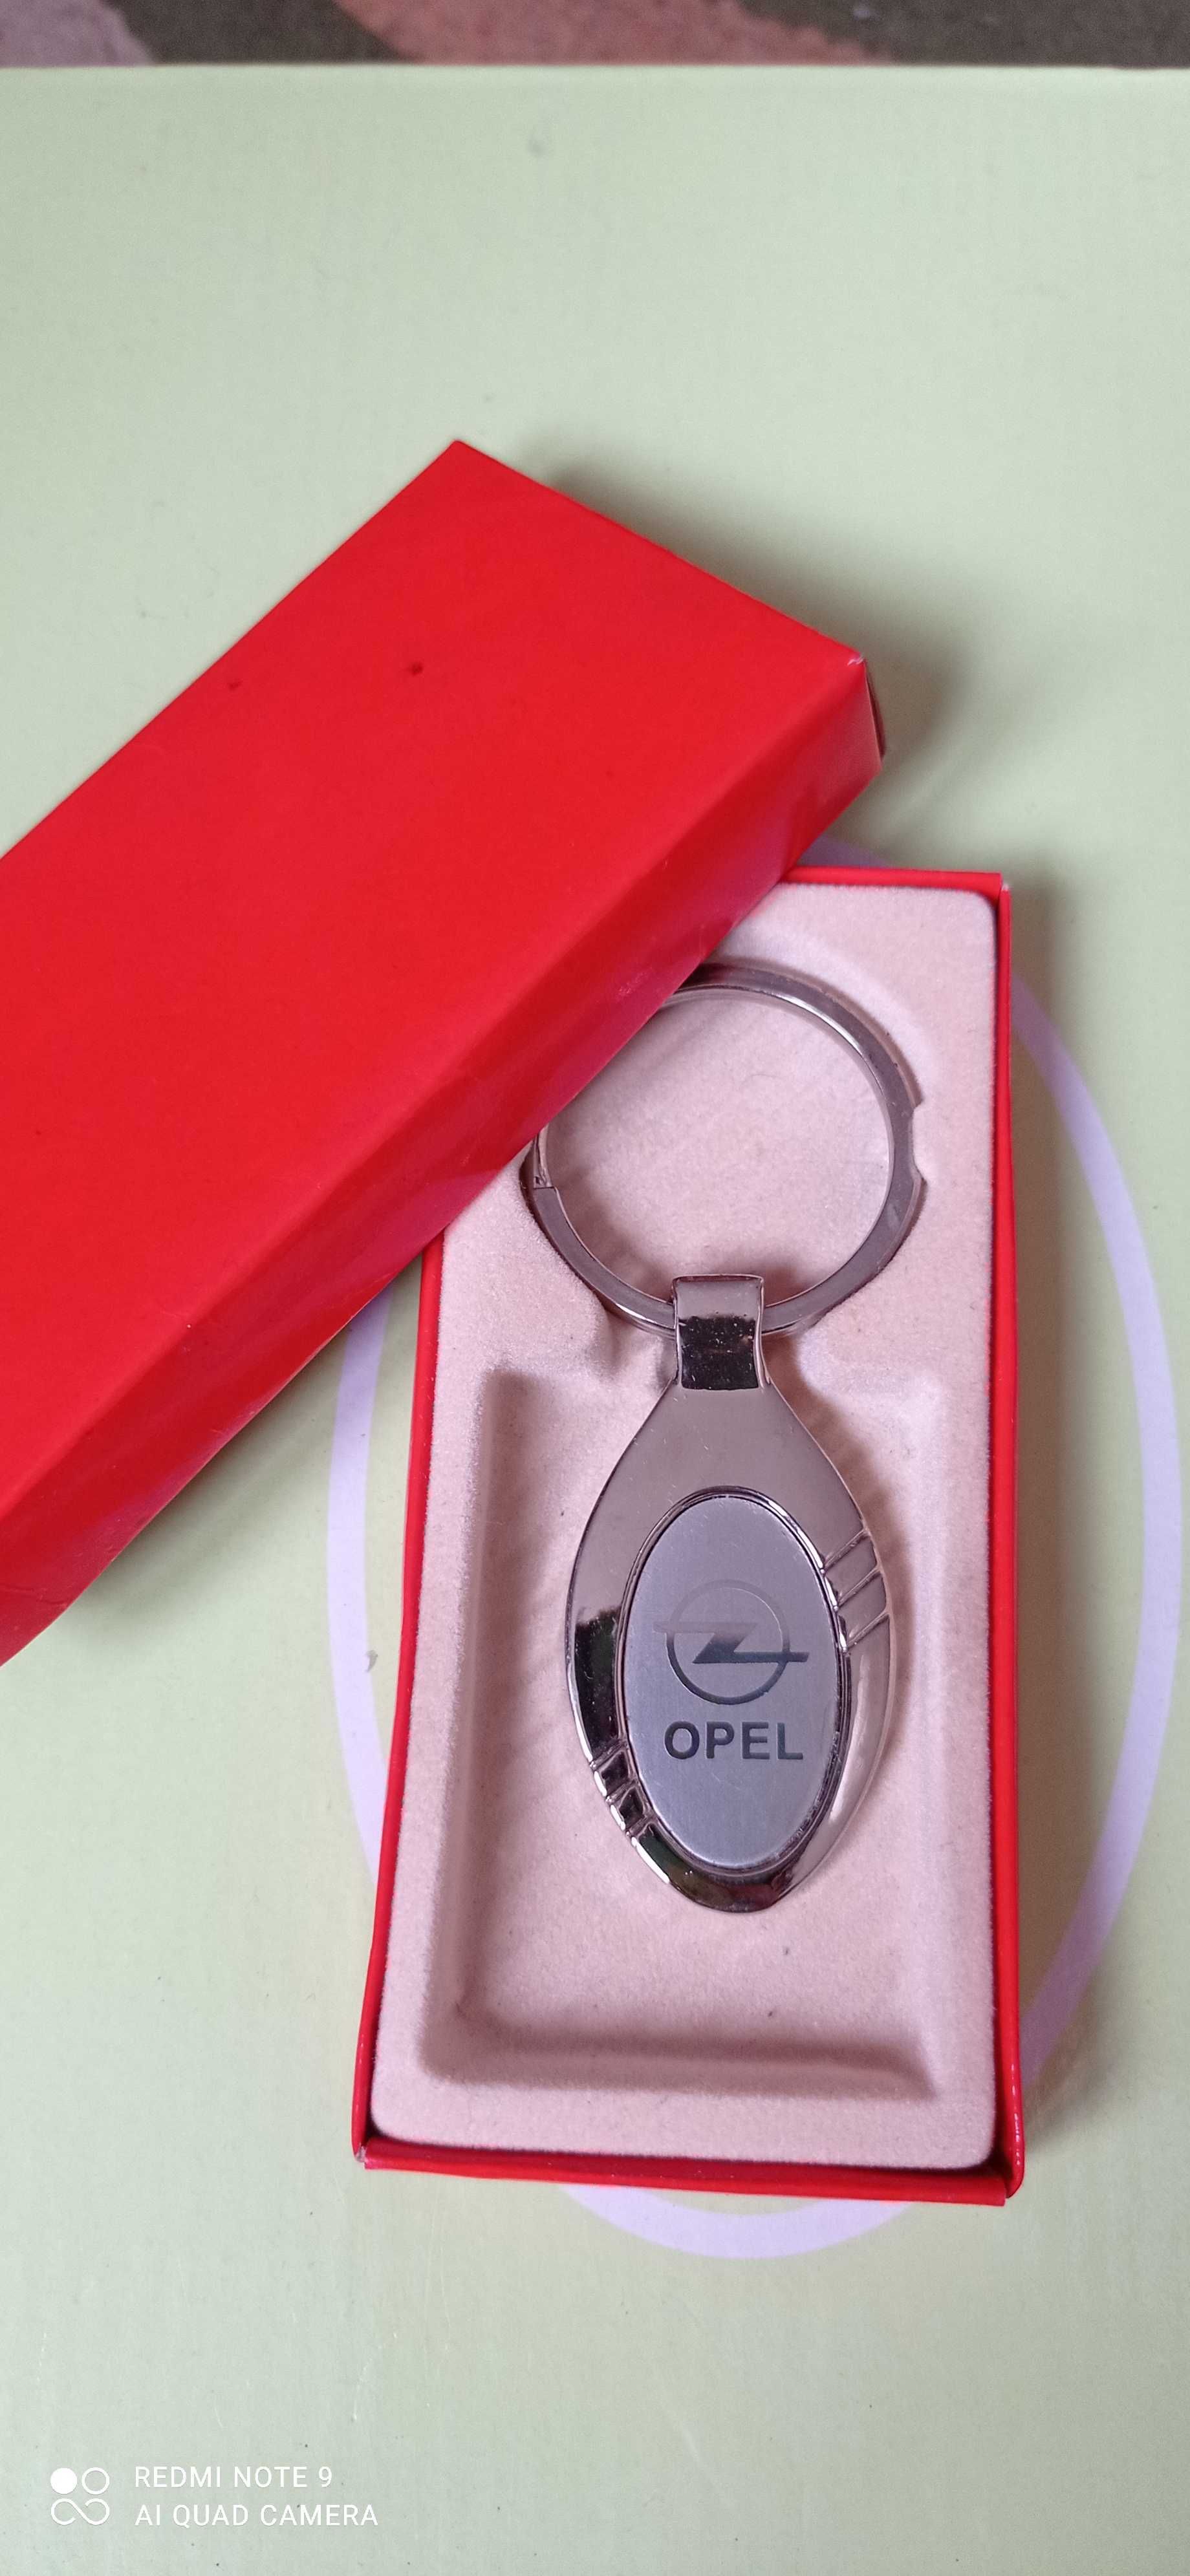 Opel breloczek -prezent